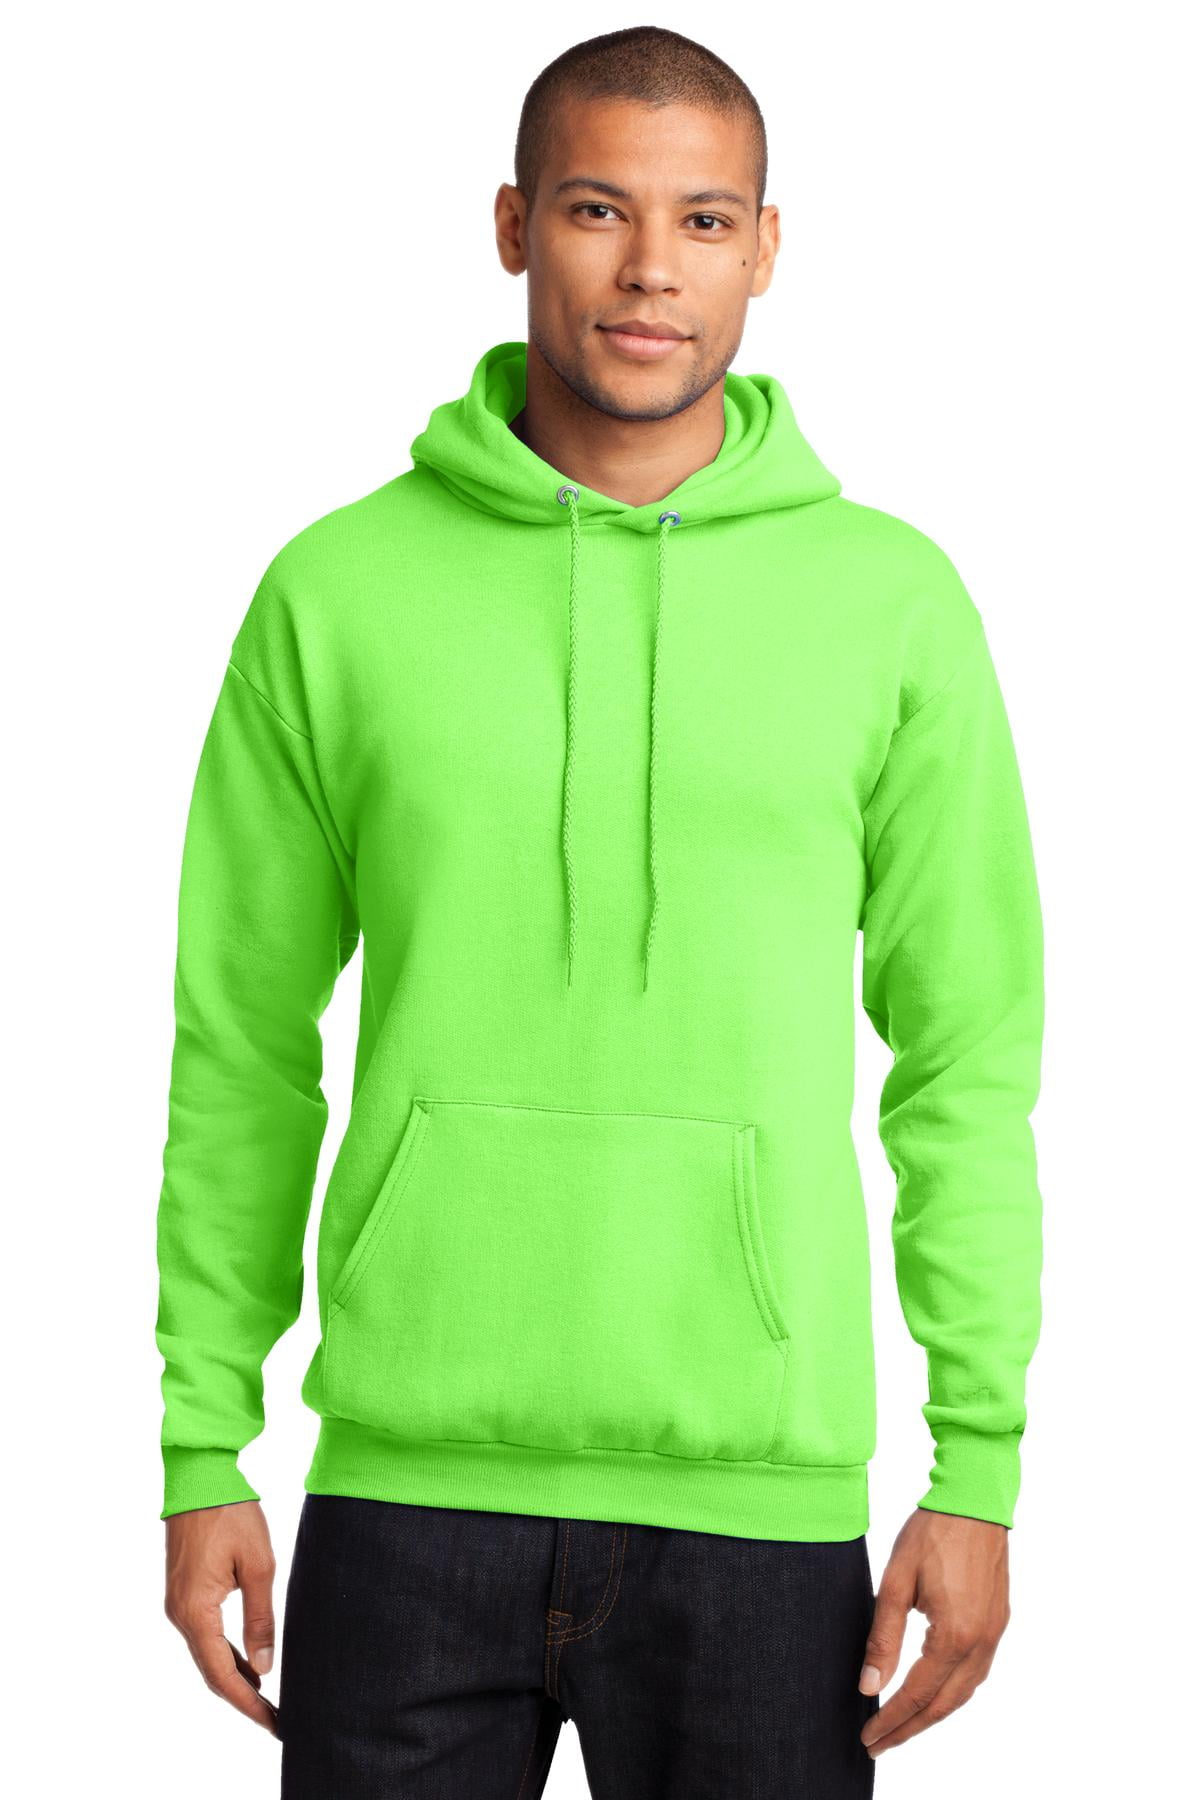 Super Soft Fleece Pullover Hooded Sweatshirt (Neon Green) – NJSpiritWear LLC